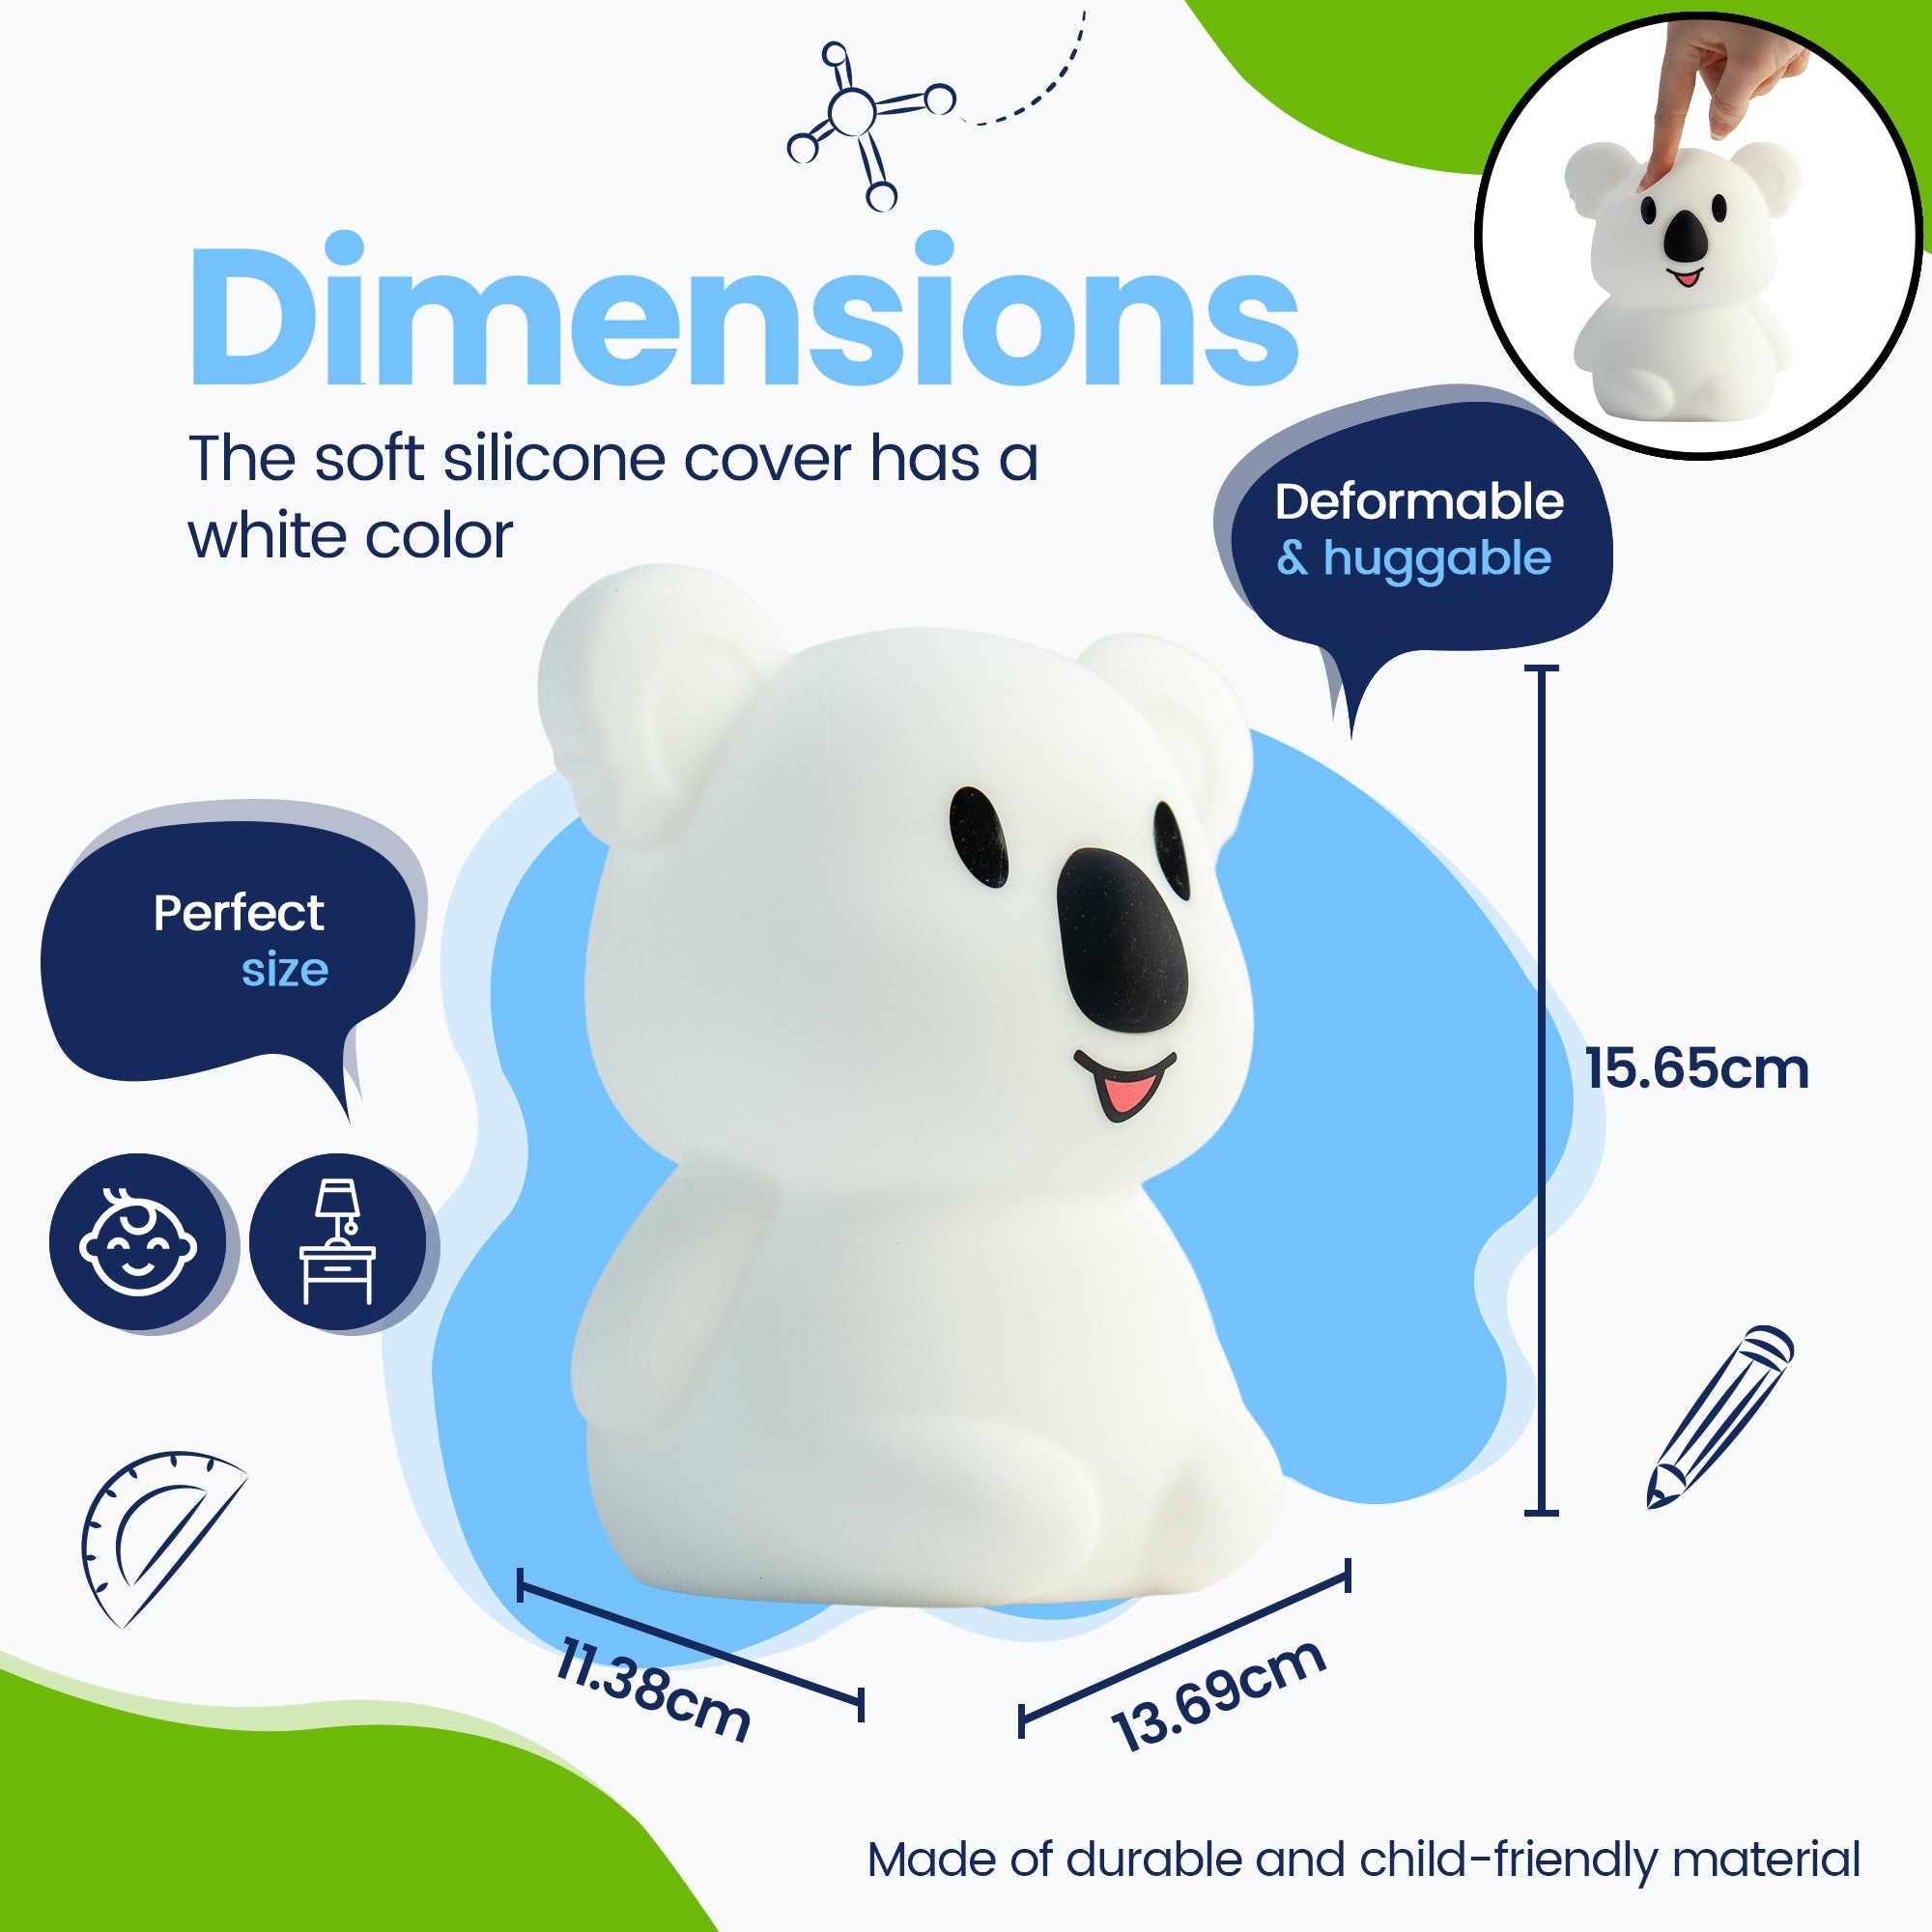 Dimensions Koala Night Lamp - Perfect size - Premium Design - The silicone cover is white in color